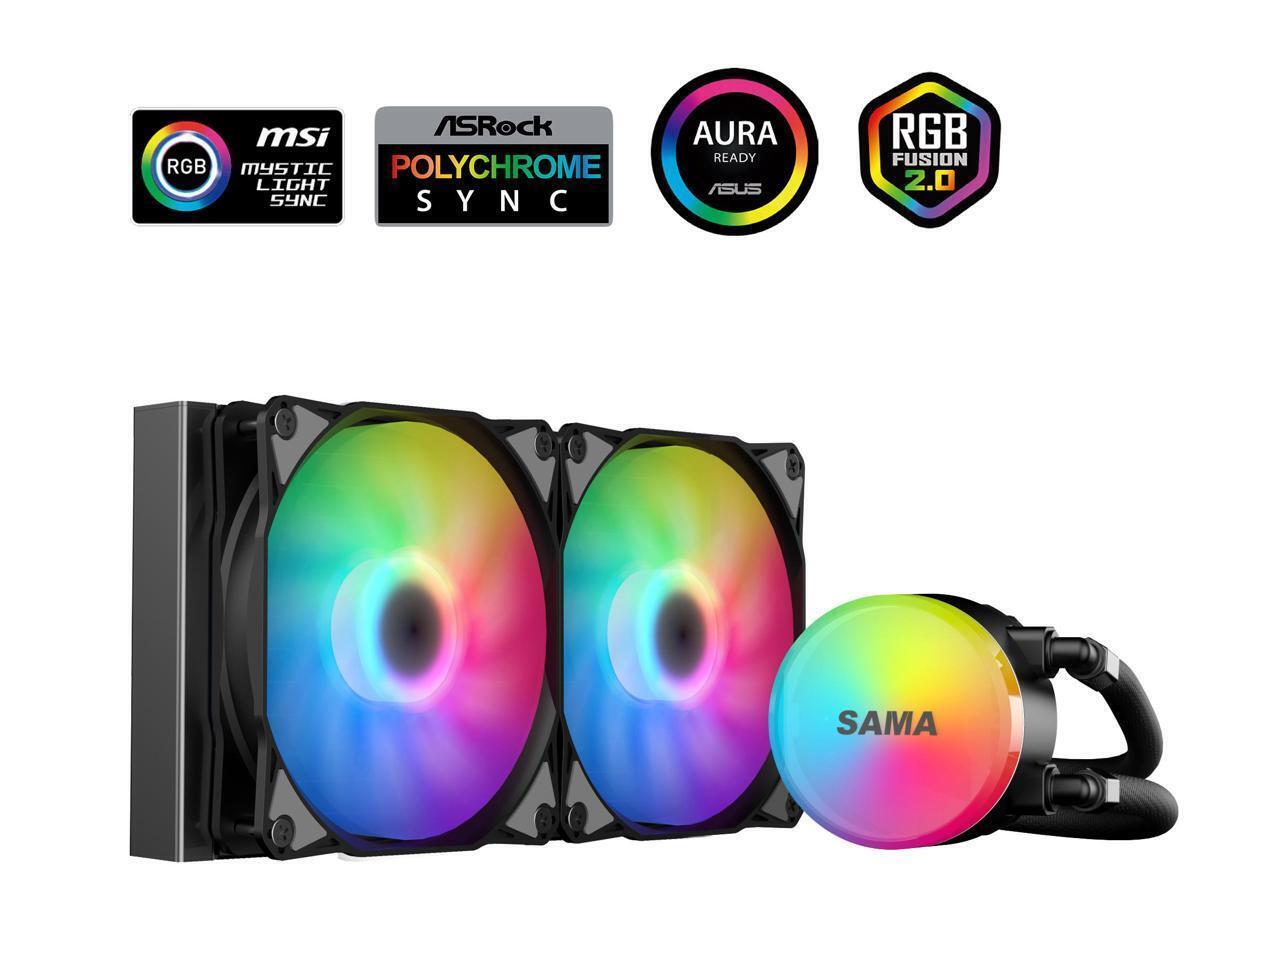 SAMA Liquid CPU Cooler Addressable RGB Pump PWM&FDB Fans AIO Water Cooler 240mm